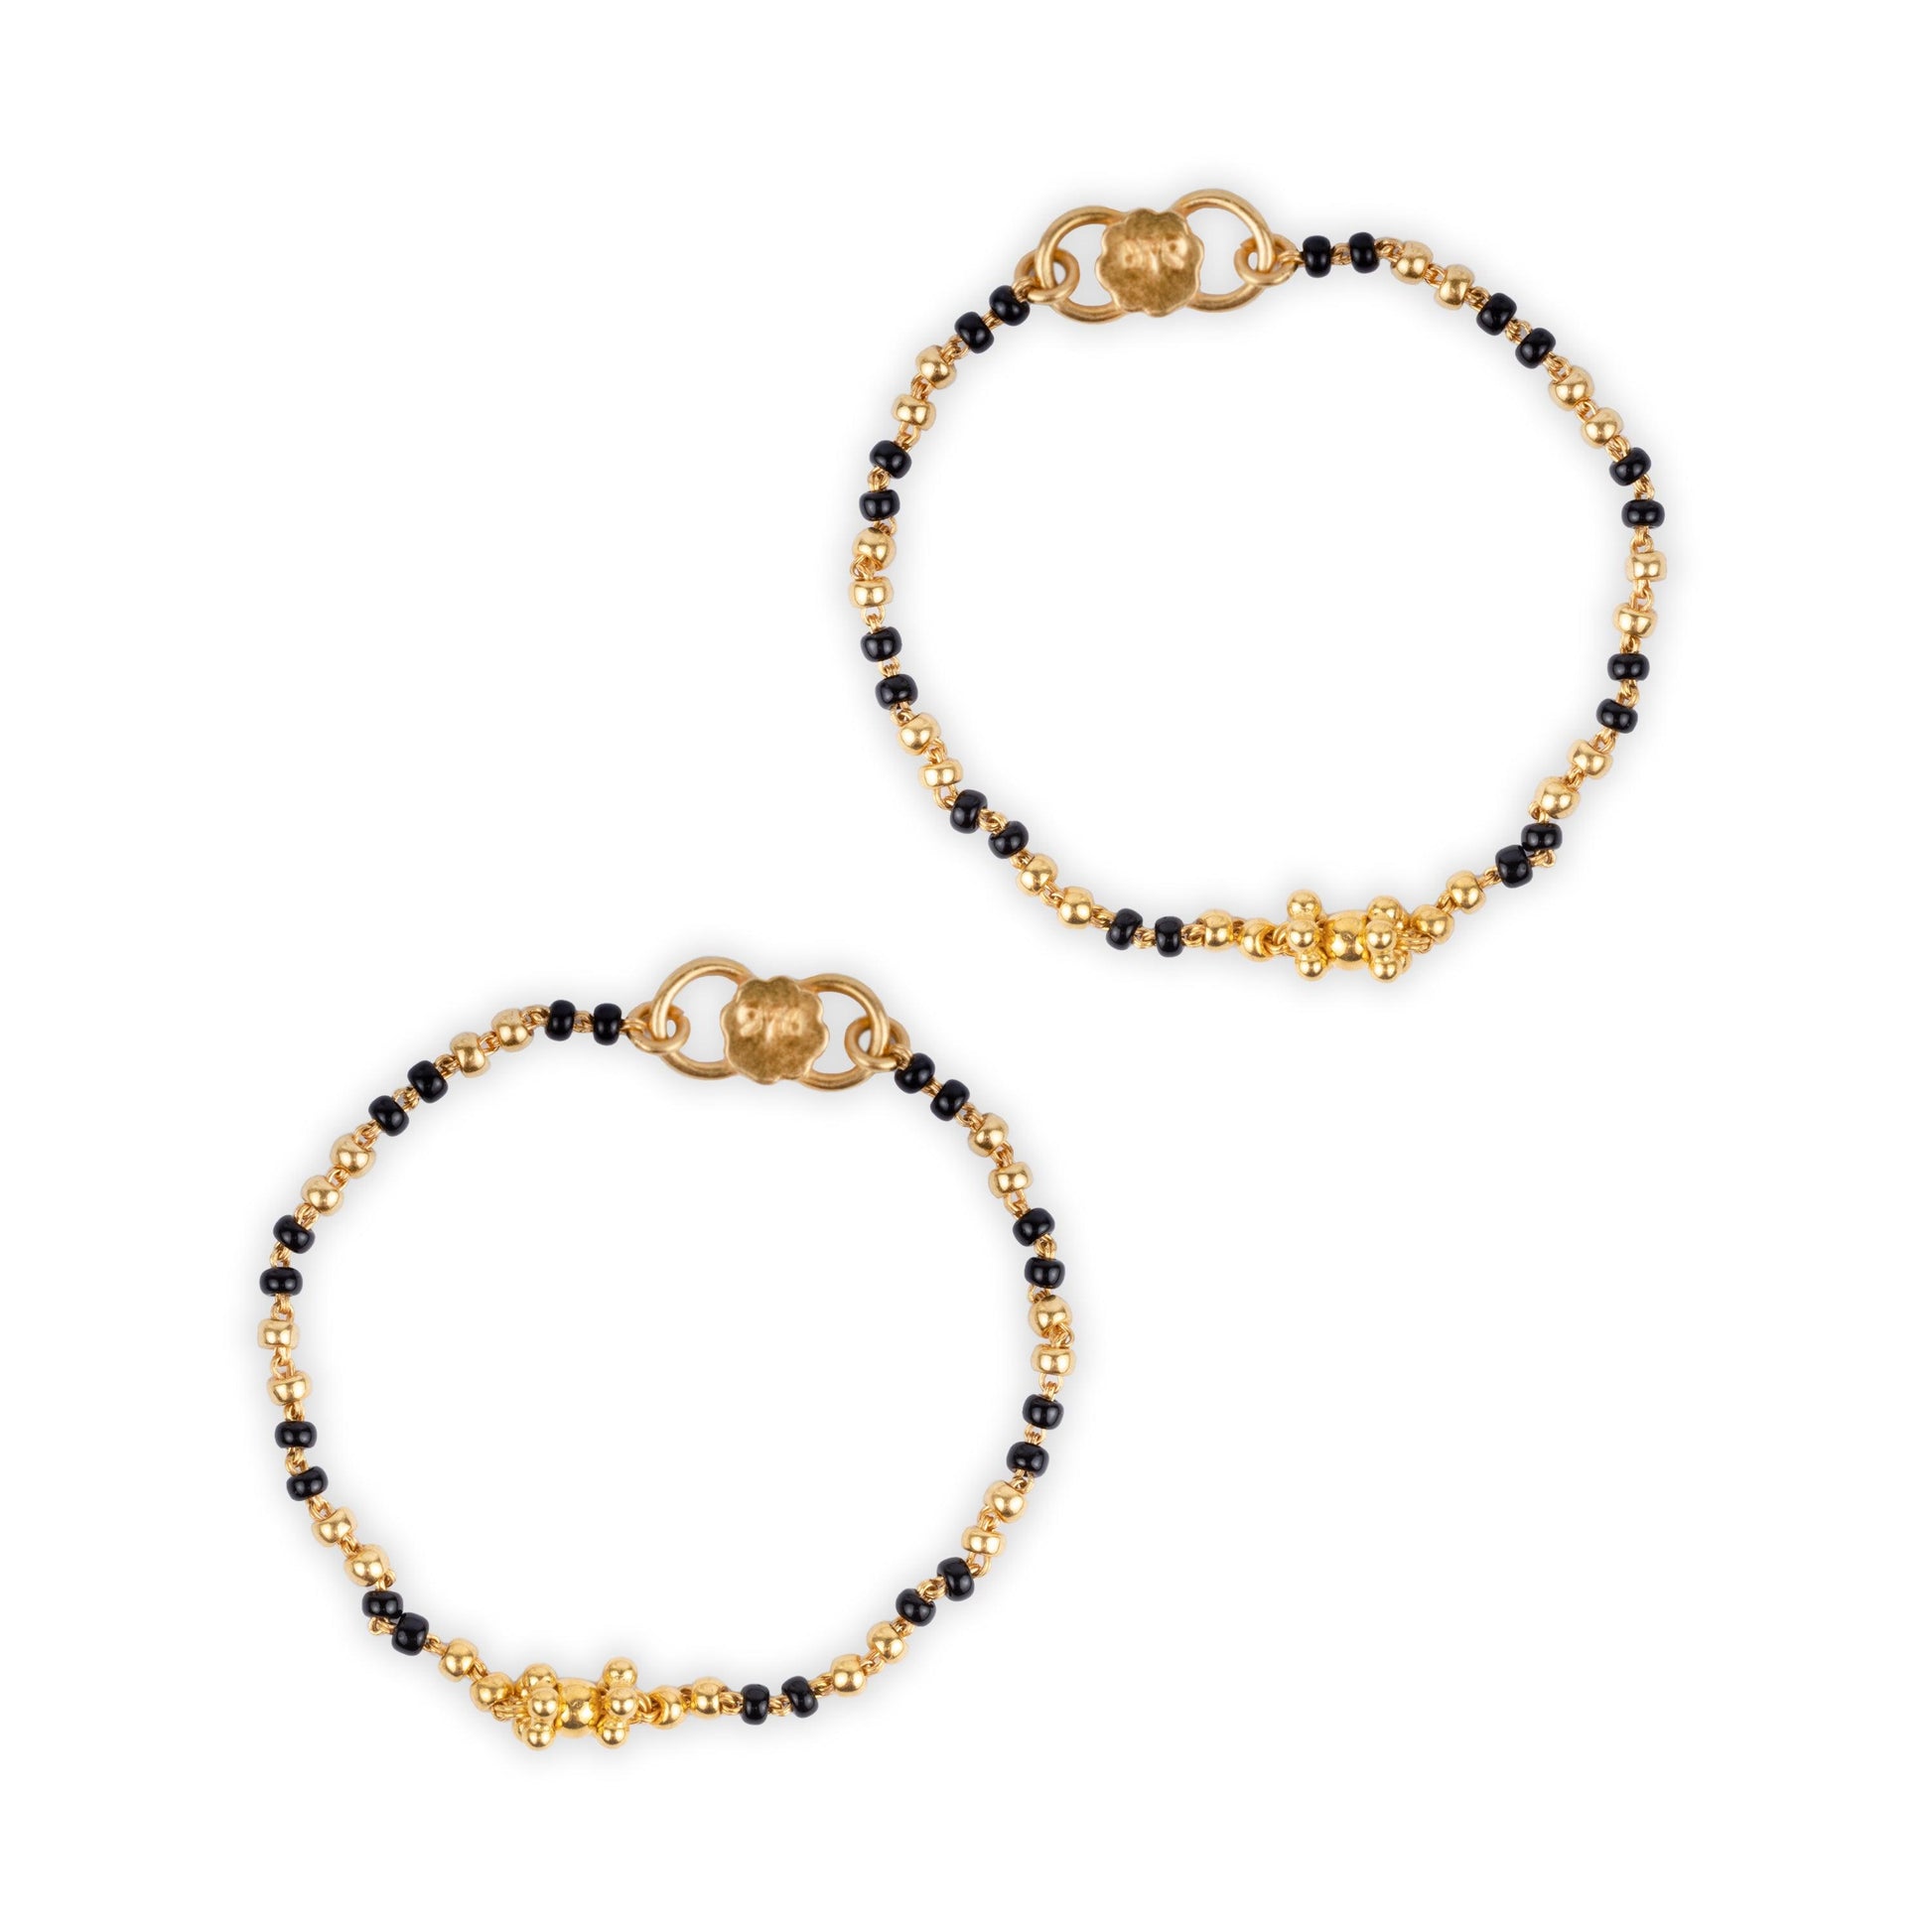 22ct Gold Children's Bracelets with Black Beads CBR-7836 - Minar Jewellers